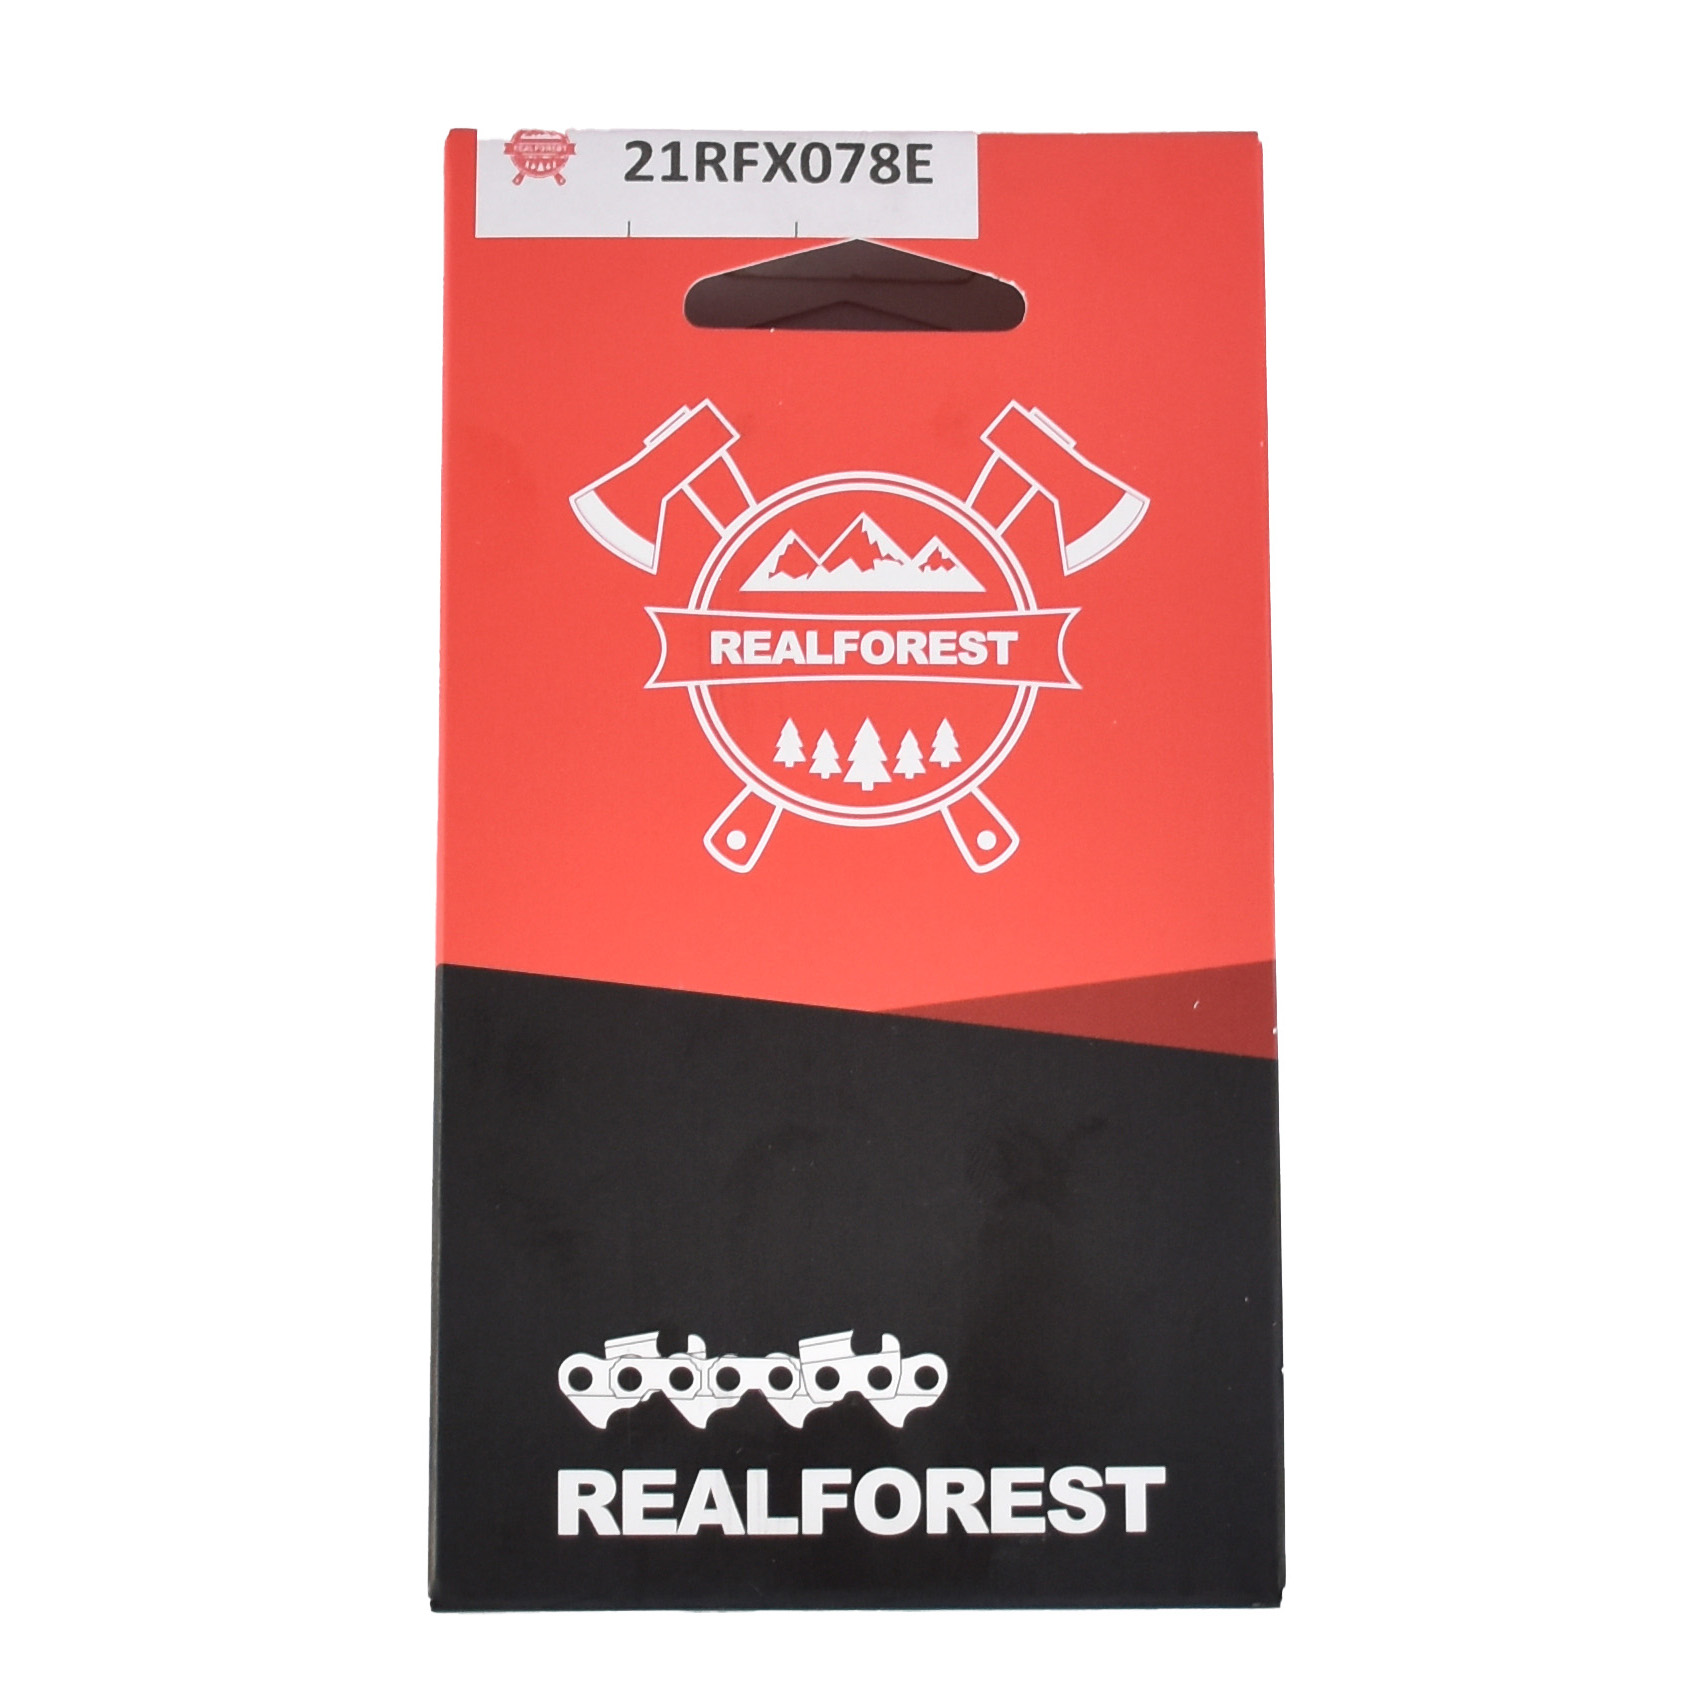 Цепь RealForest Super Chisel (78 зв., 0,325", 1,5 мм)